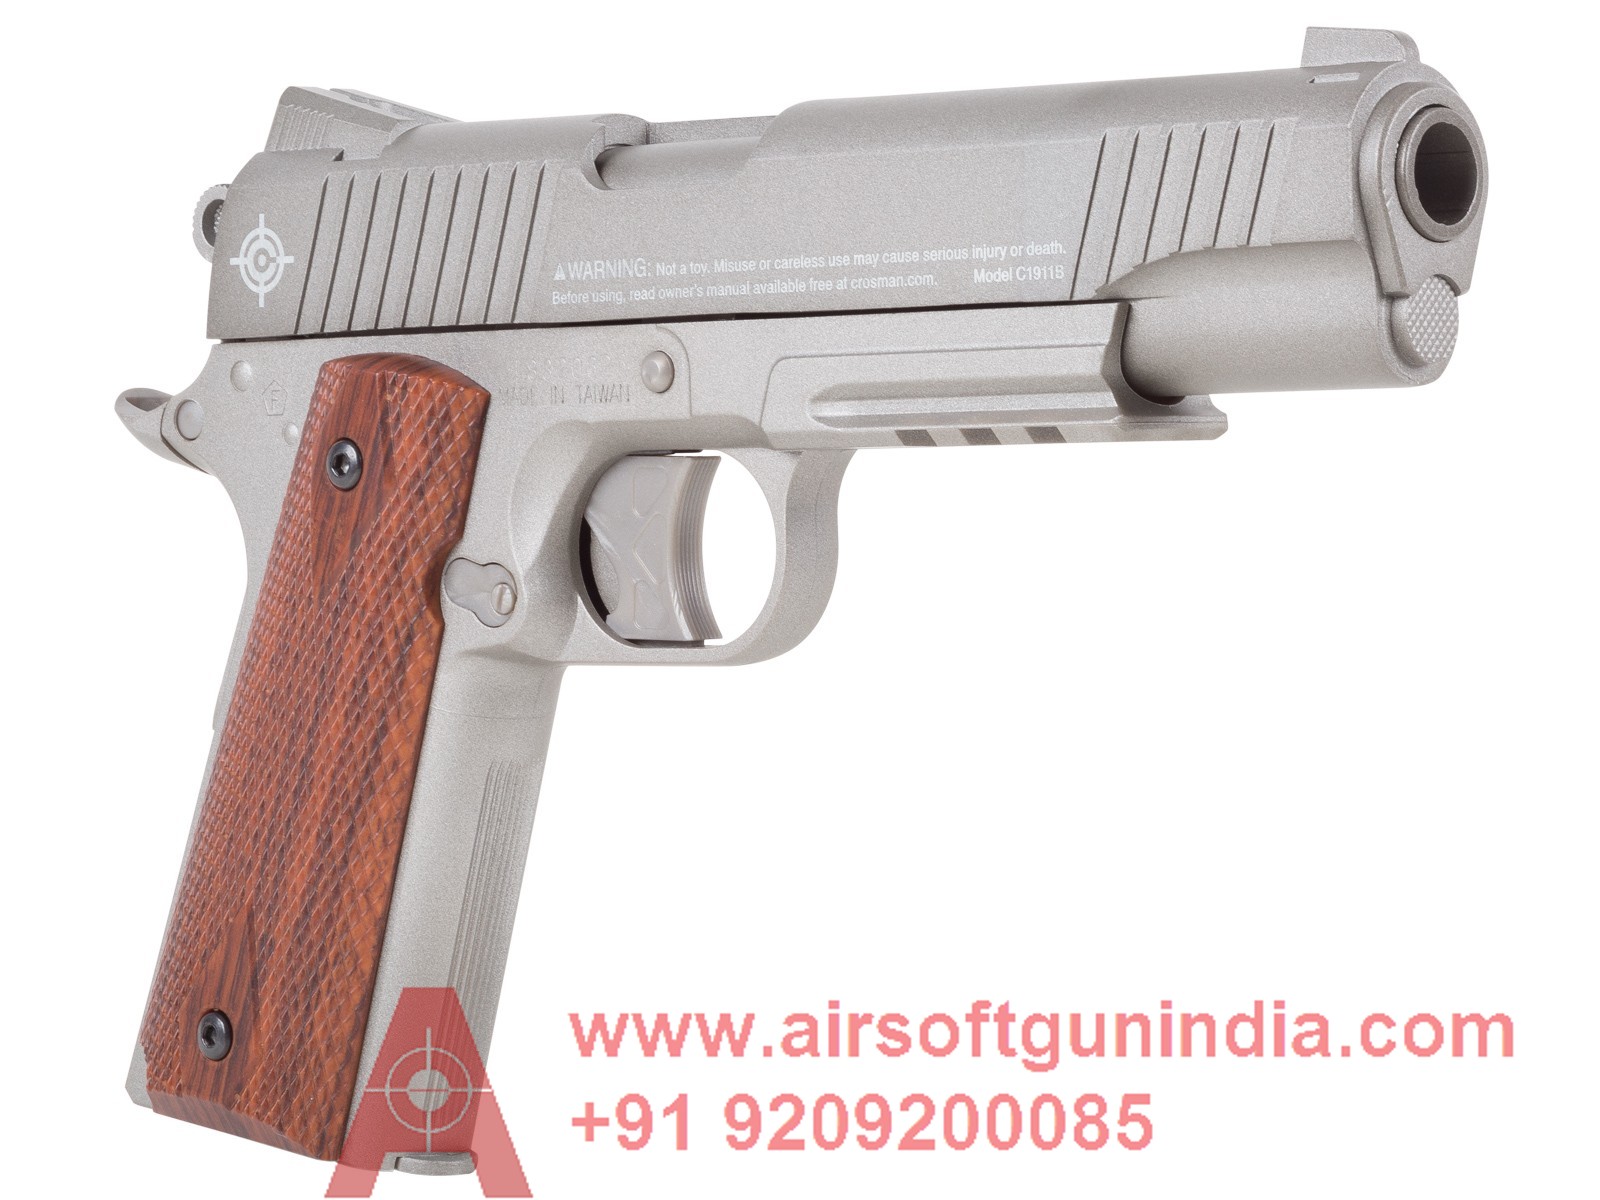 Crosman 1911 CO2 Pellet Pistol, Silver By Airsoft Gun India